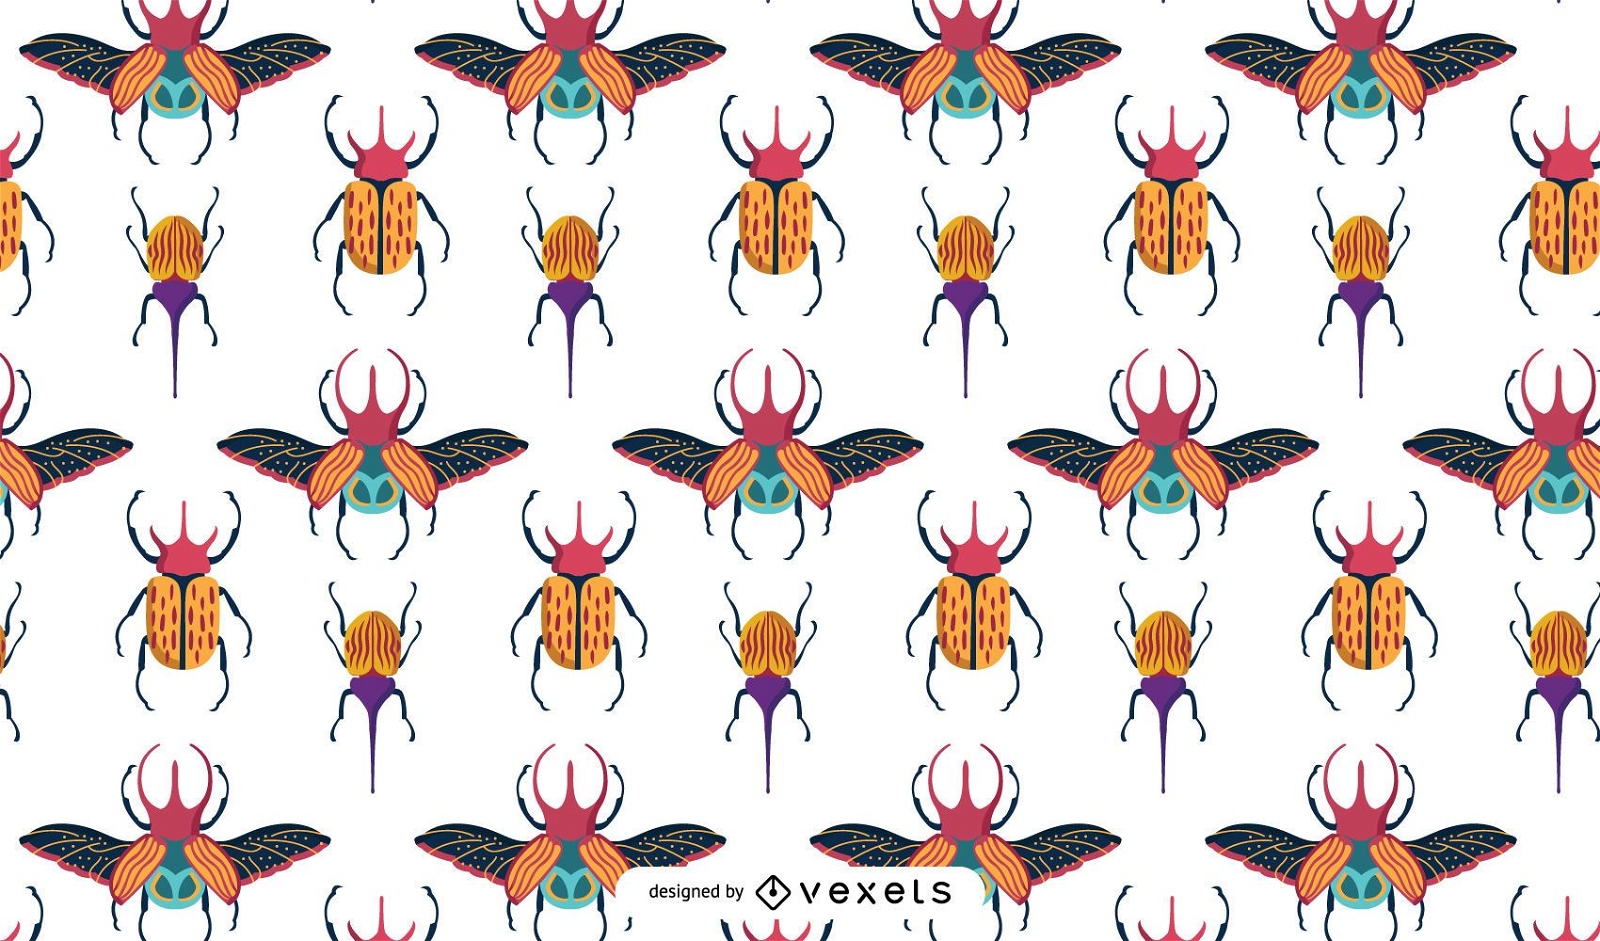 Käfer buntes Musterdesign